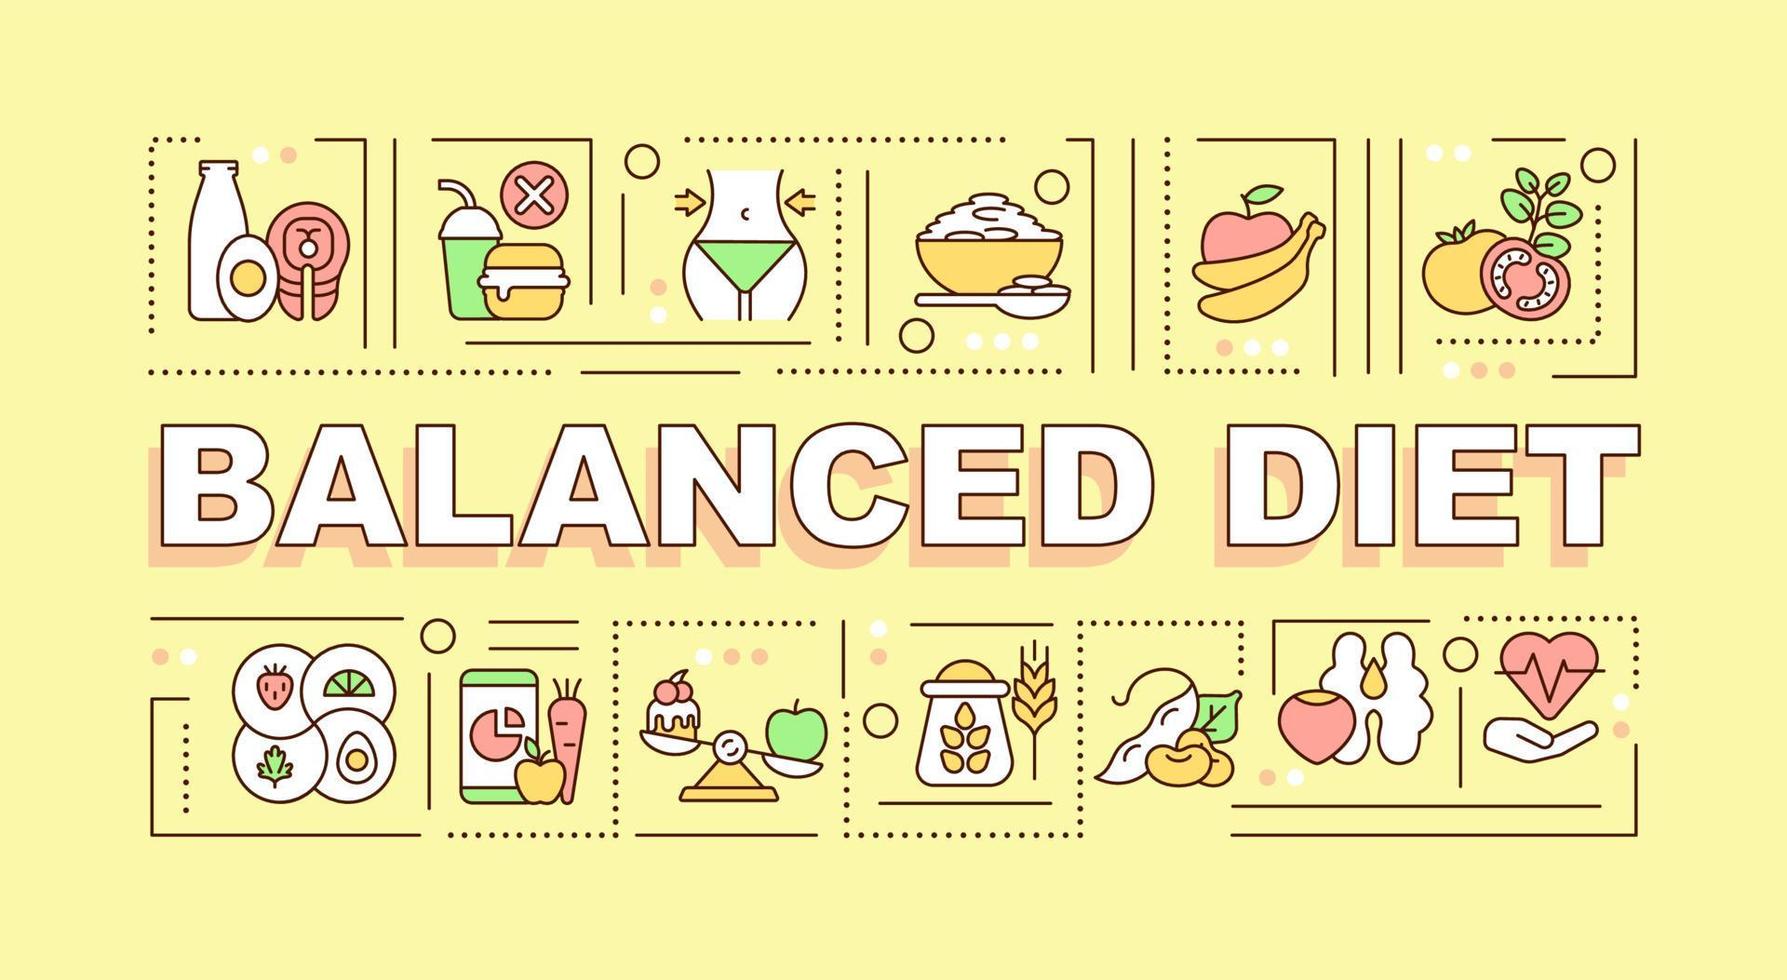 Balanced diet word concepts banner vector